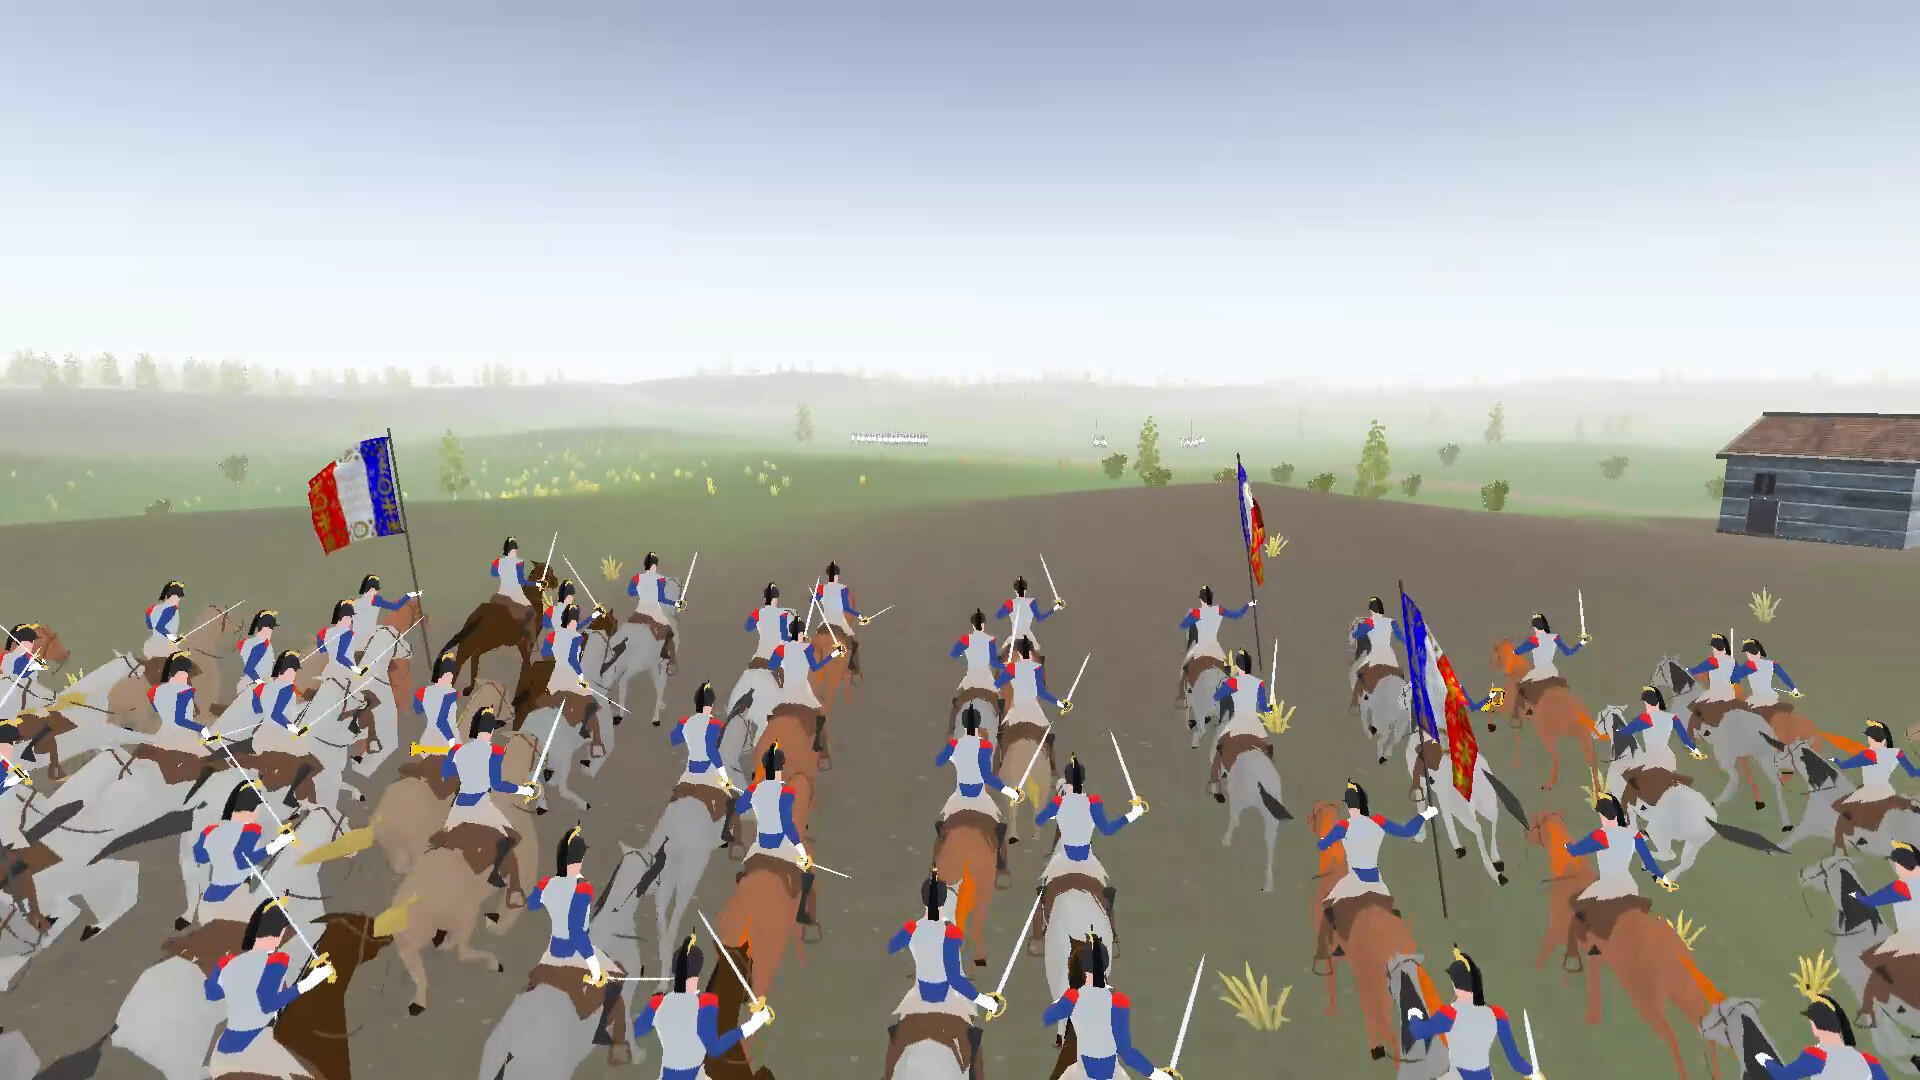 Field of Honor screenshot game